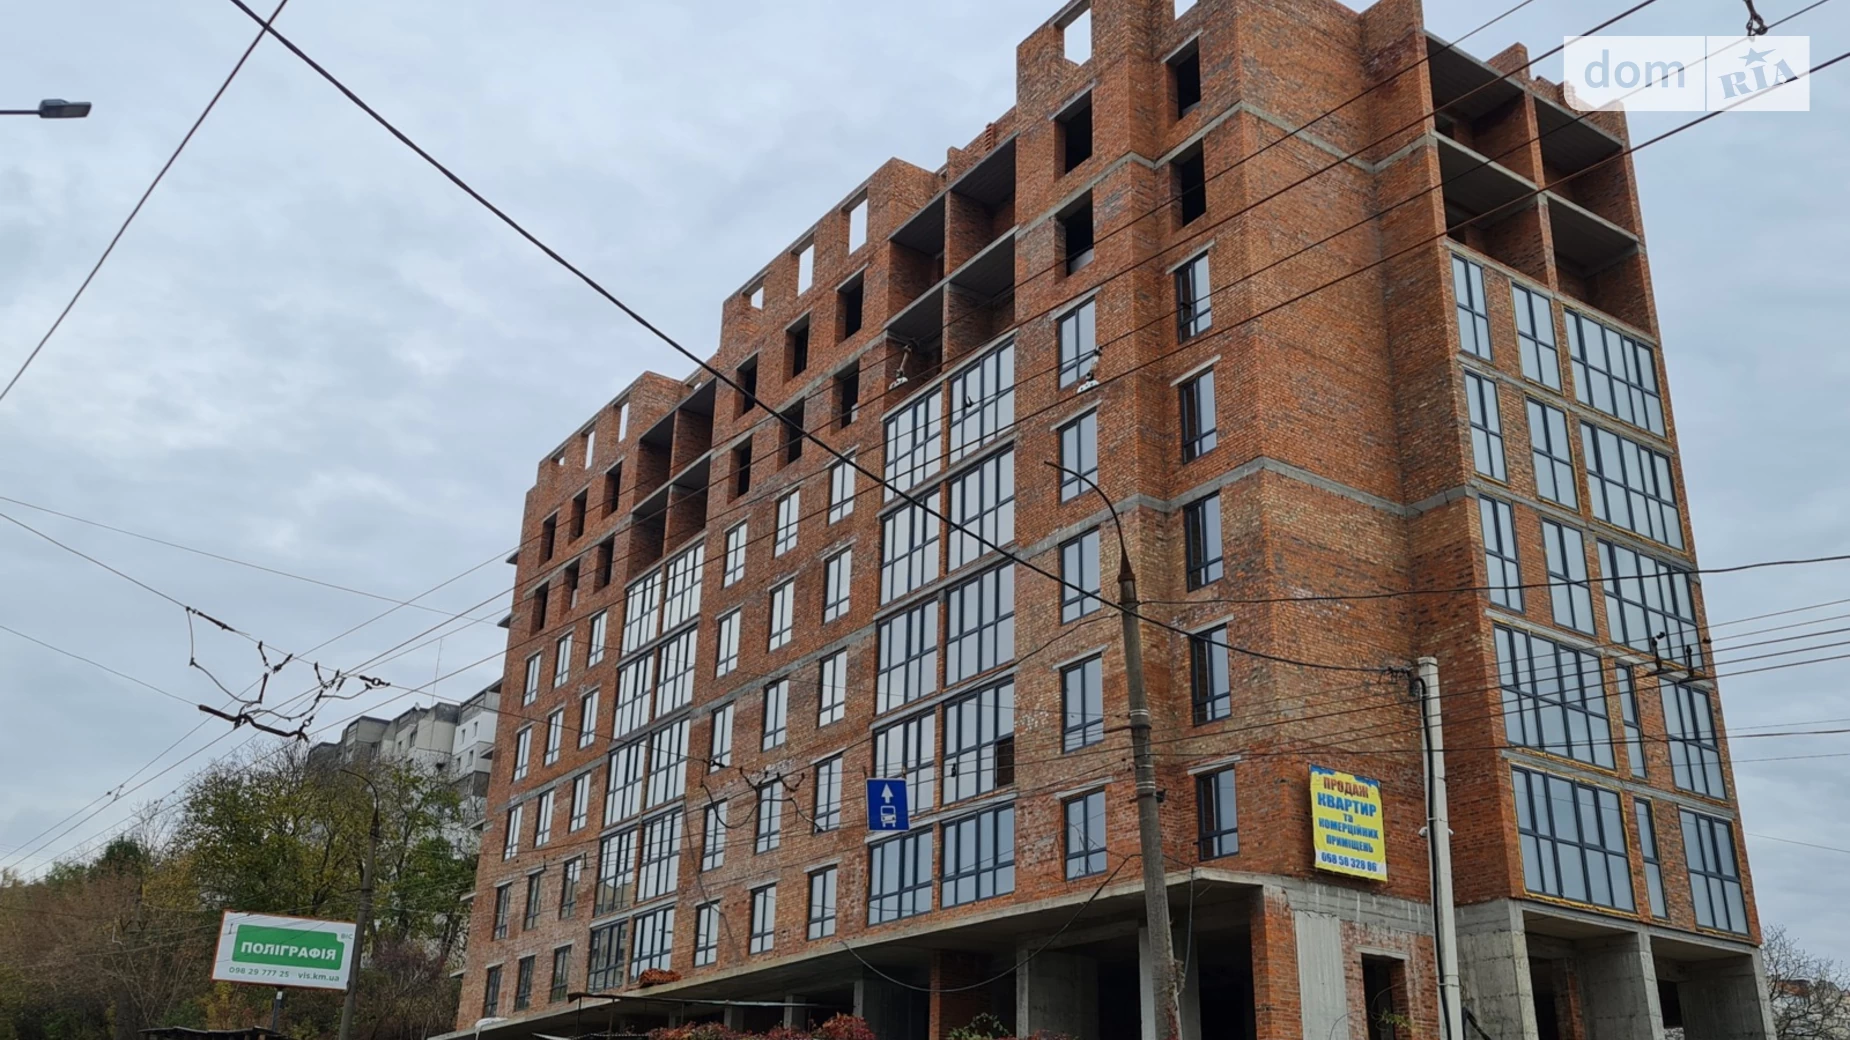 Продається 2-кімнатна квартира 59.15 кв. м у Хмельницькому, вул. Степана Бандери